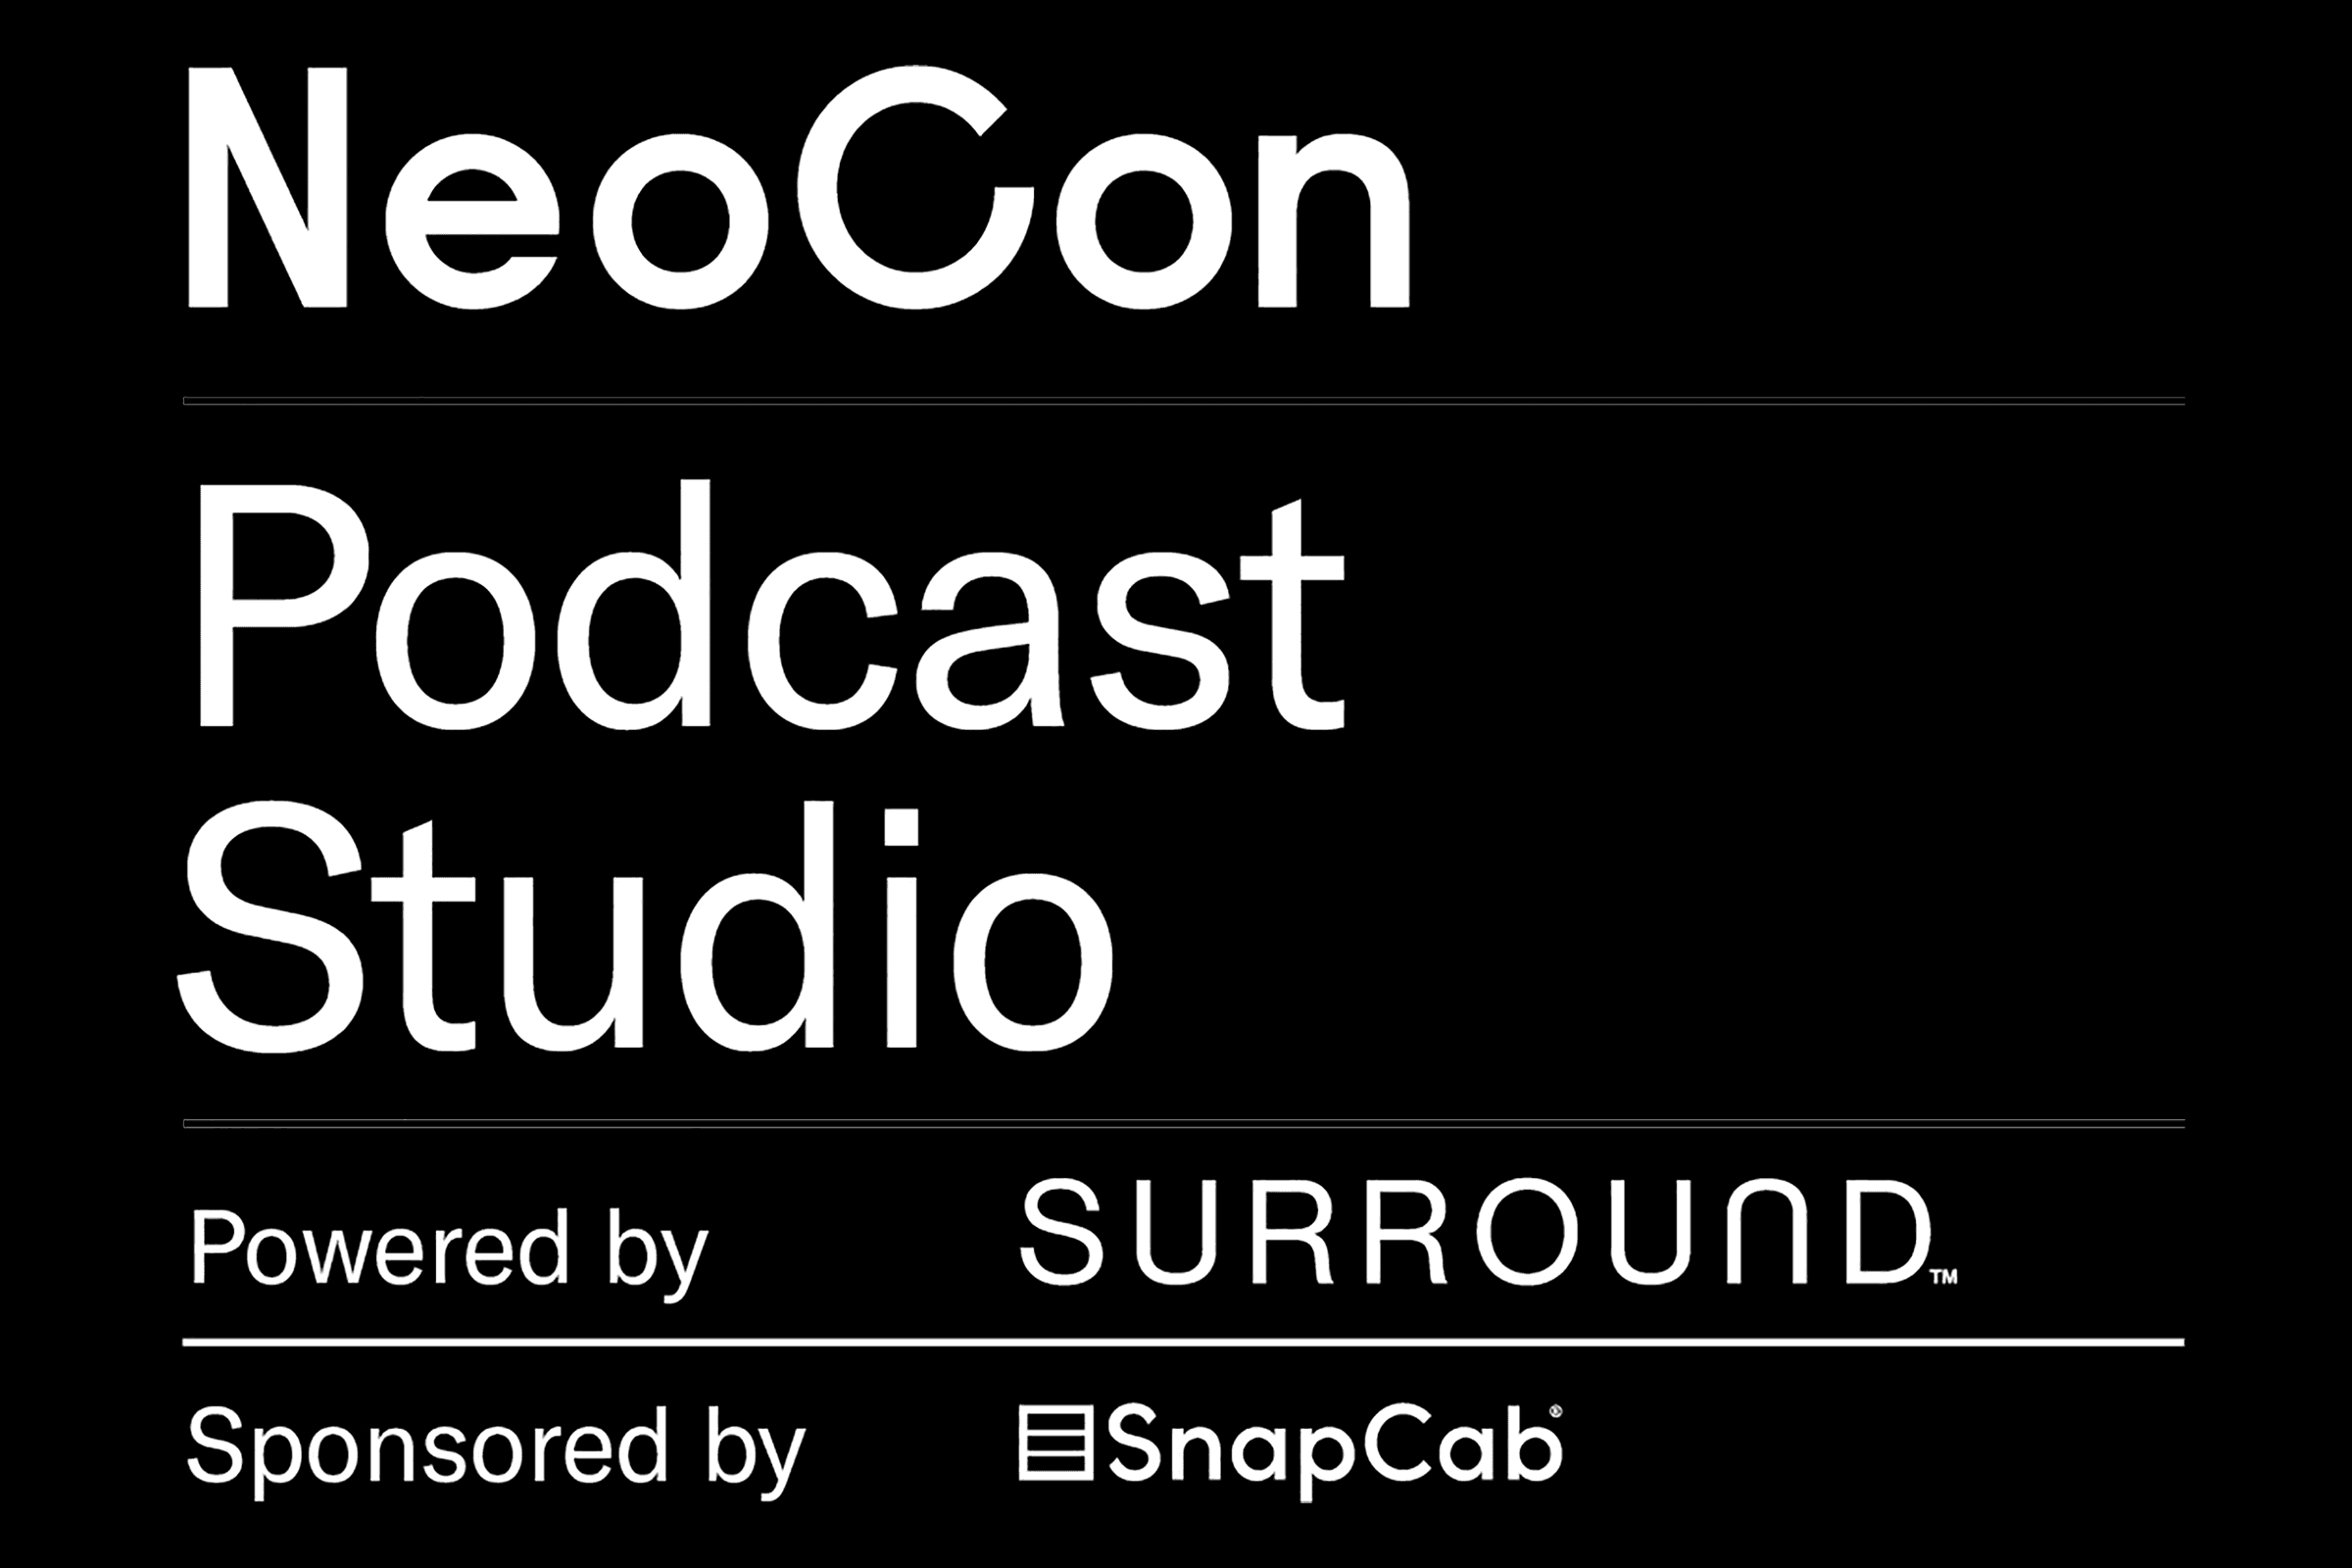 NeoCon Podcast Studio Powered by SURROUND